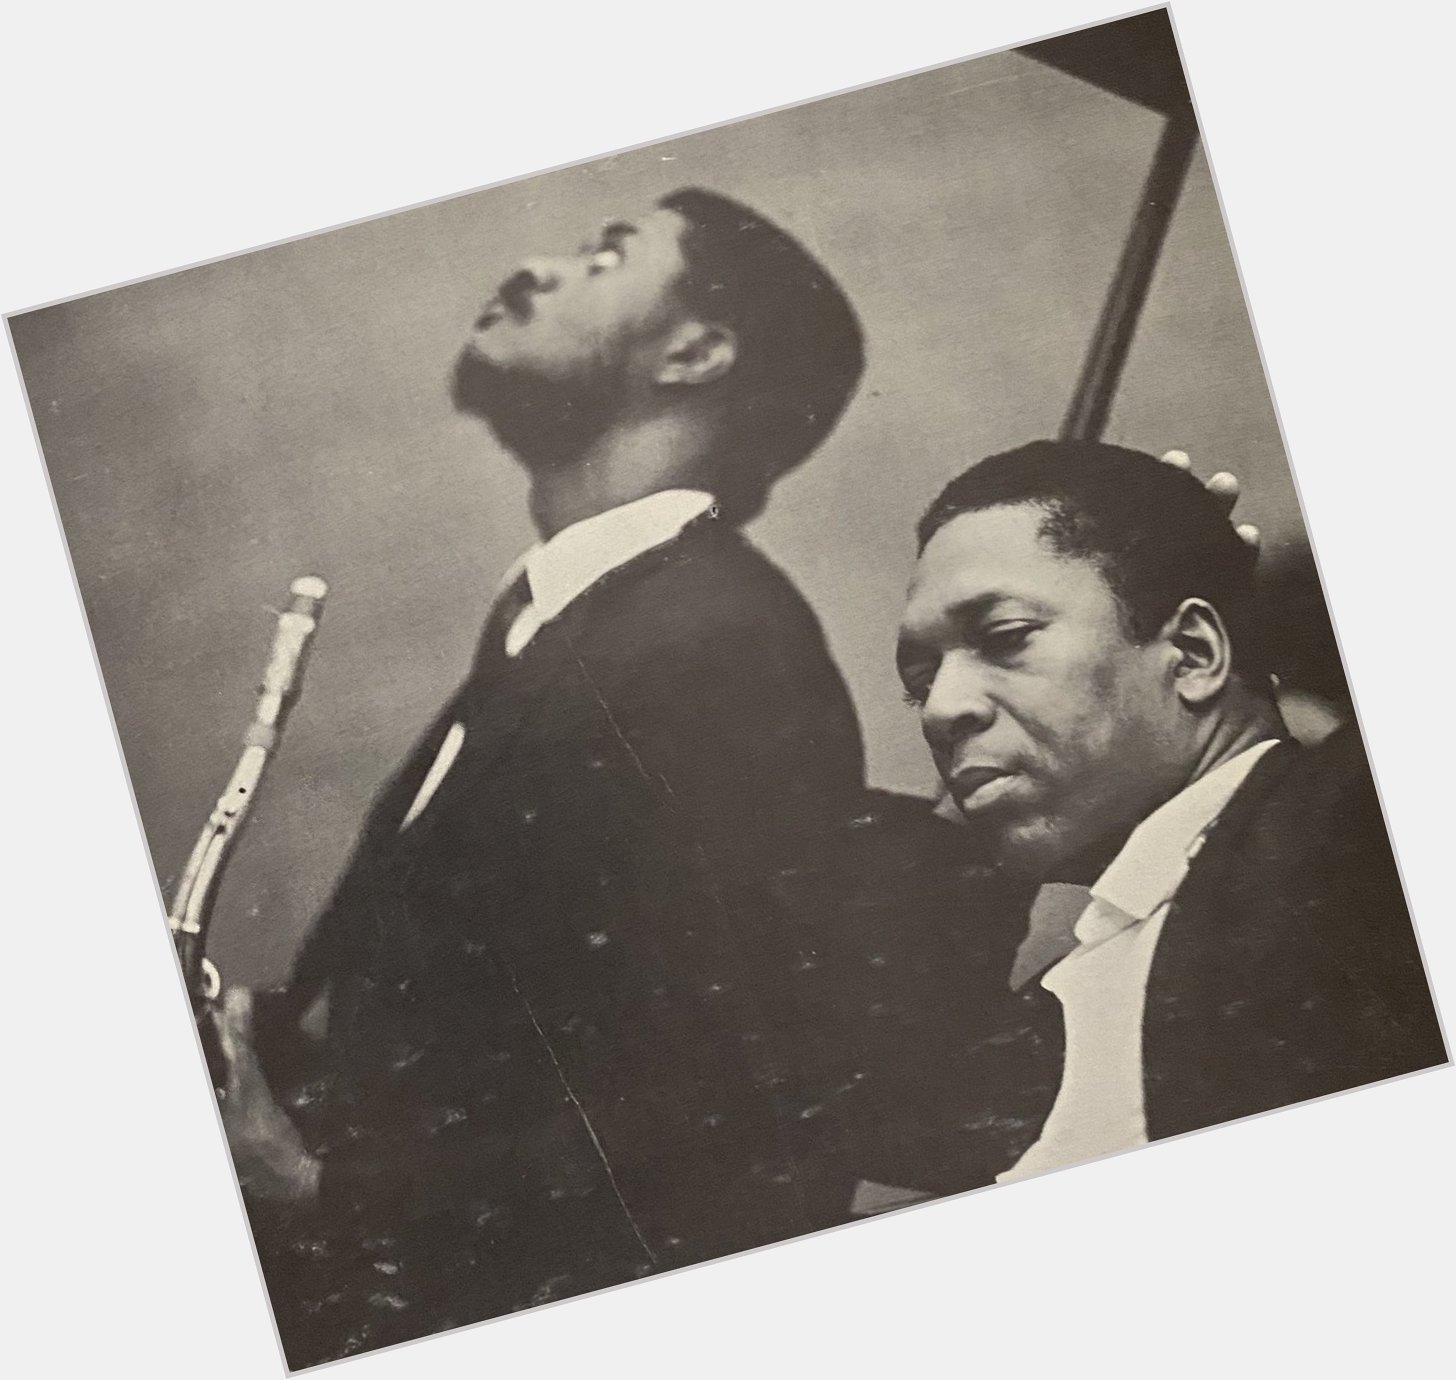 Happy birthday, John Coltrane! And good morning, Pharoah Sanders. 